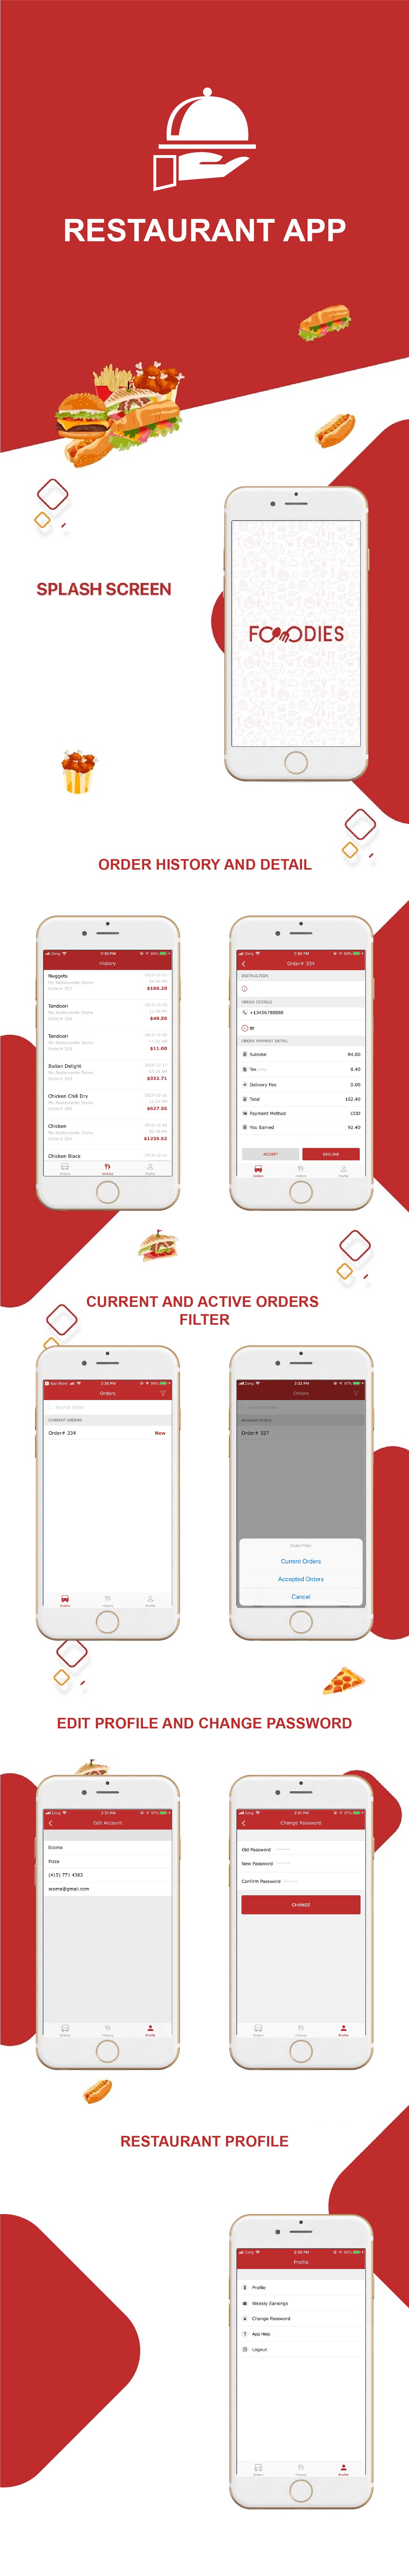 Foodies - IOS Native Order Taking Restaurant App - 3